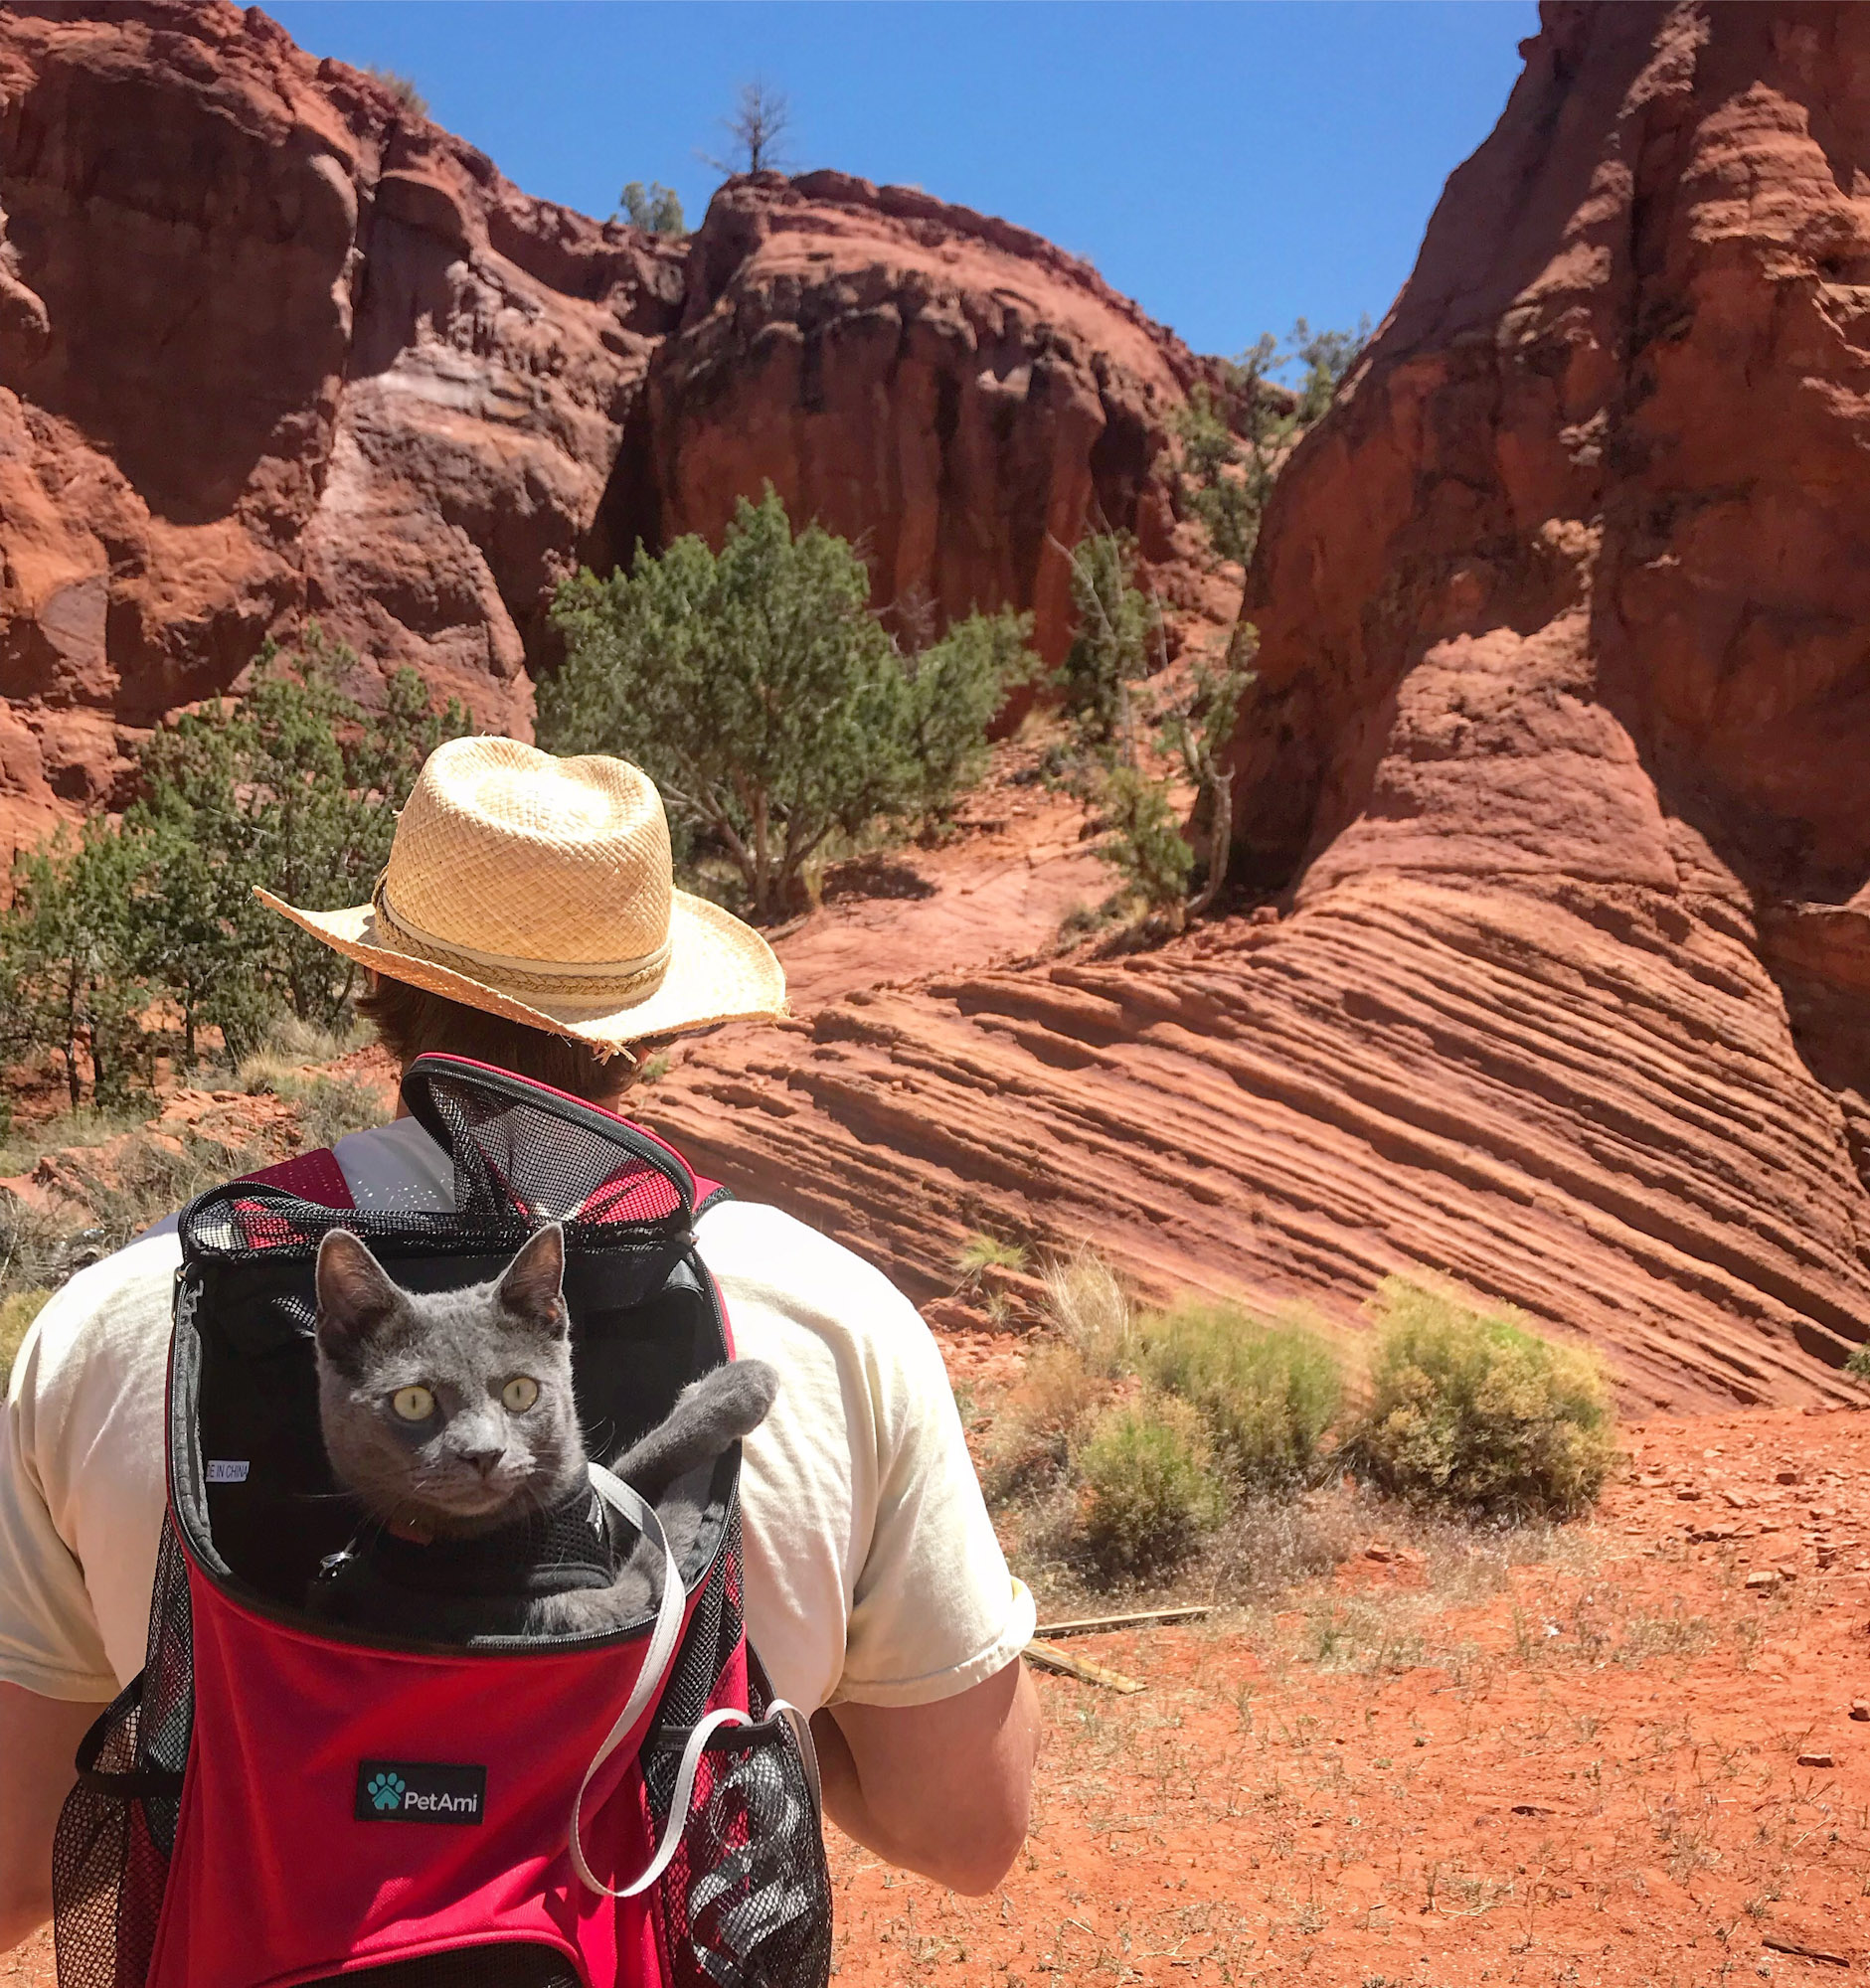 gray adventure cat rides in backpack through desert